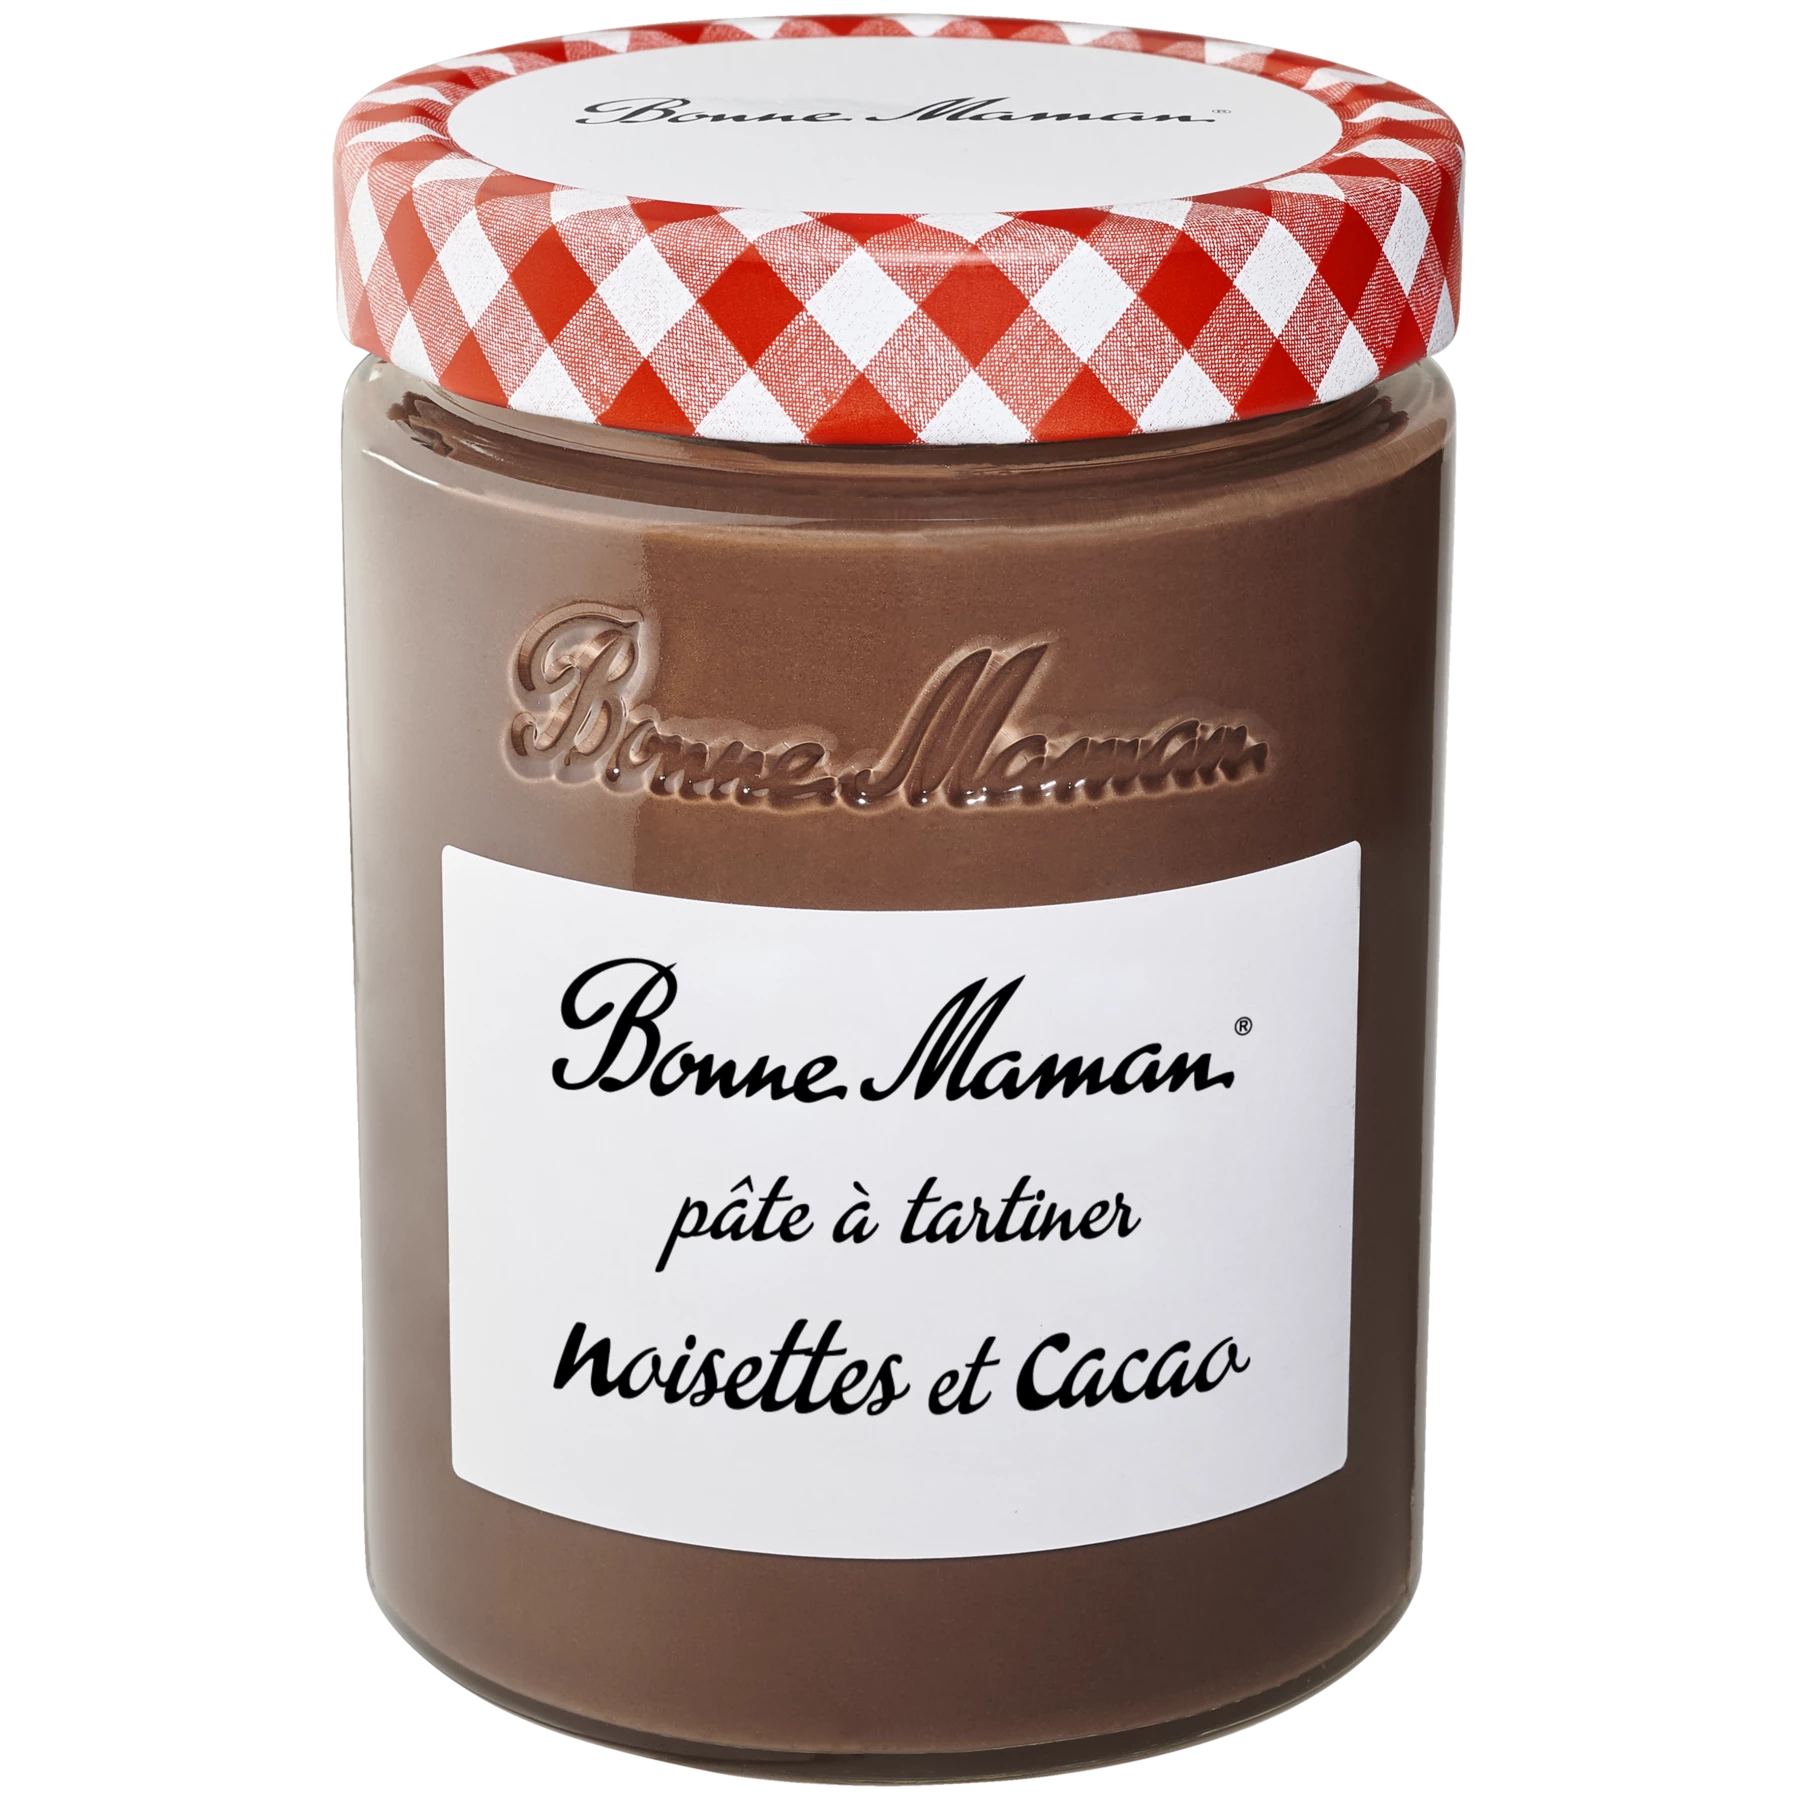 Hazelnut and cocoa spread 580g - BONNE MAMAN